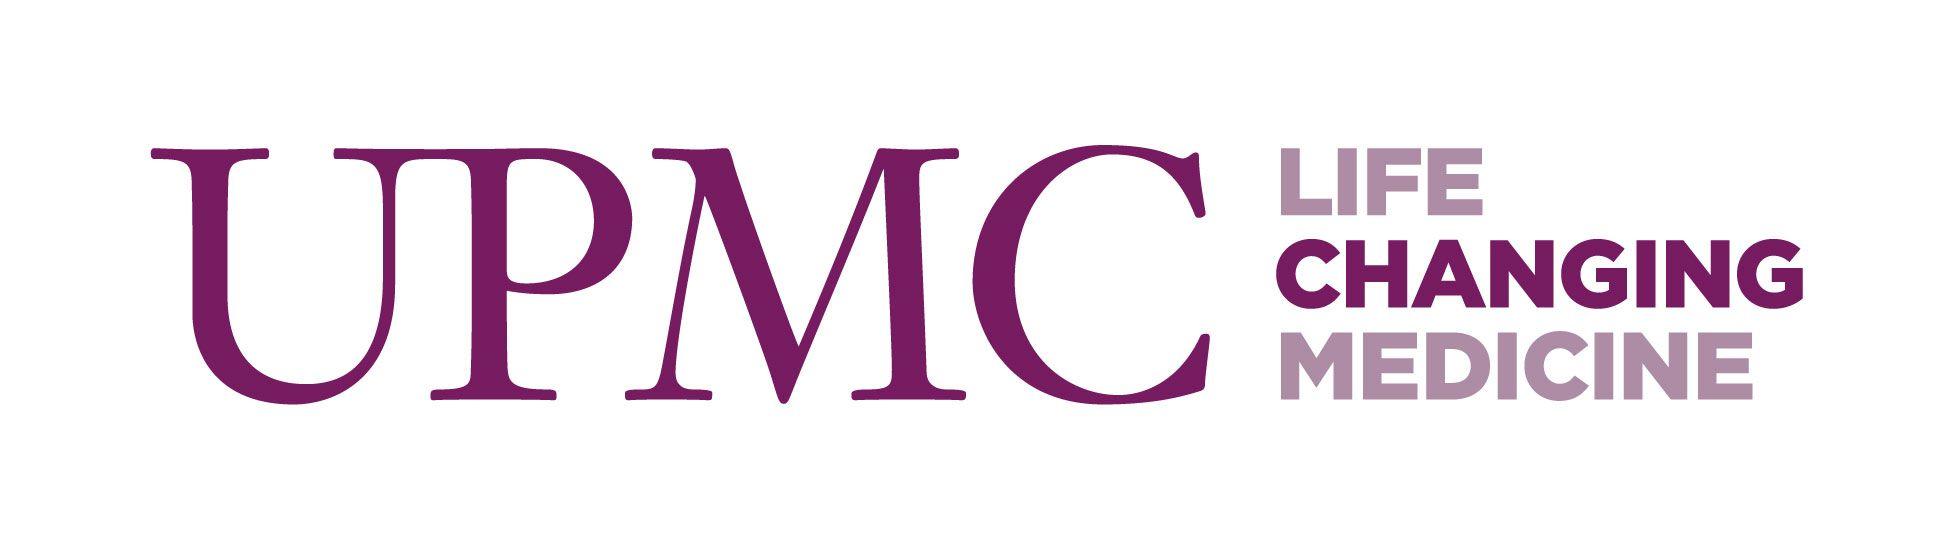 UPMC Logo - UPMC-Logo-Color-in-jpg : Tissuepathology.com